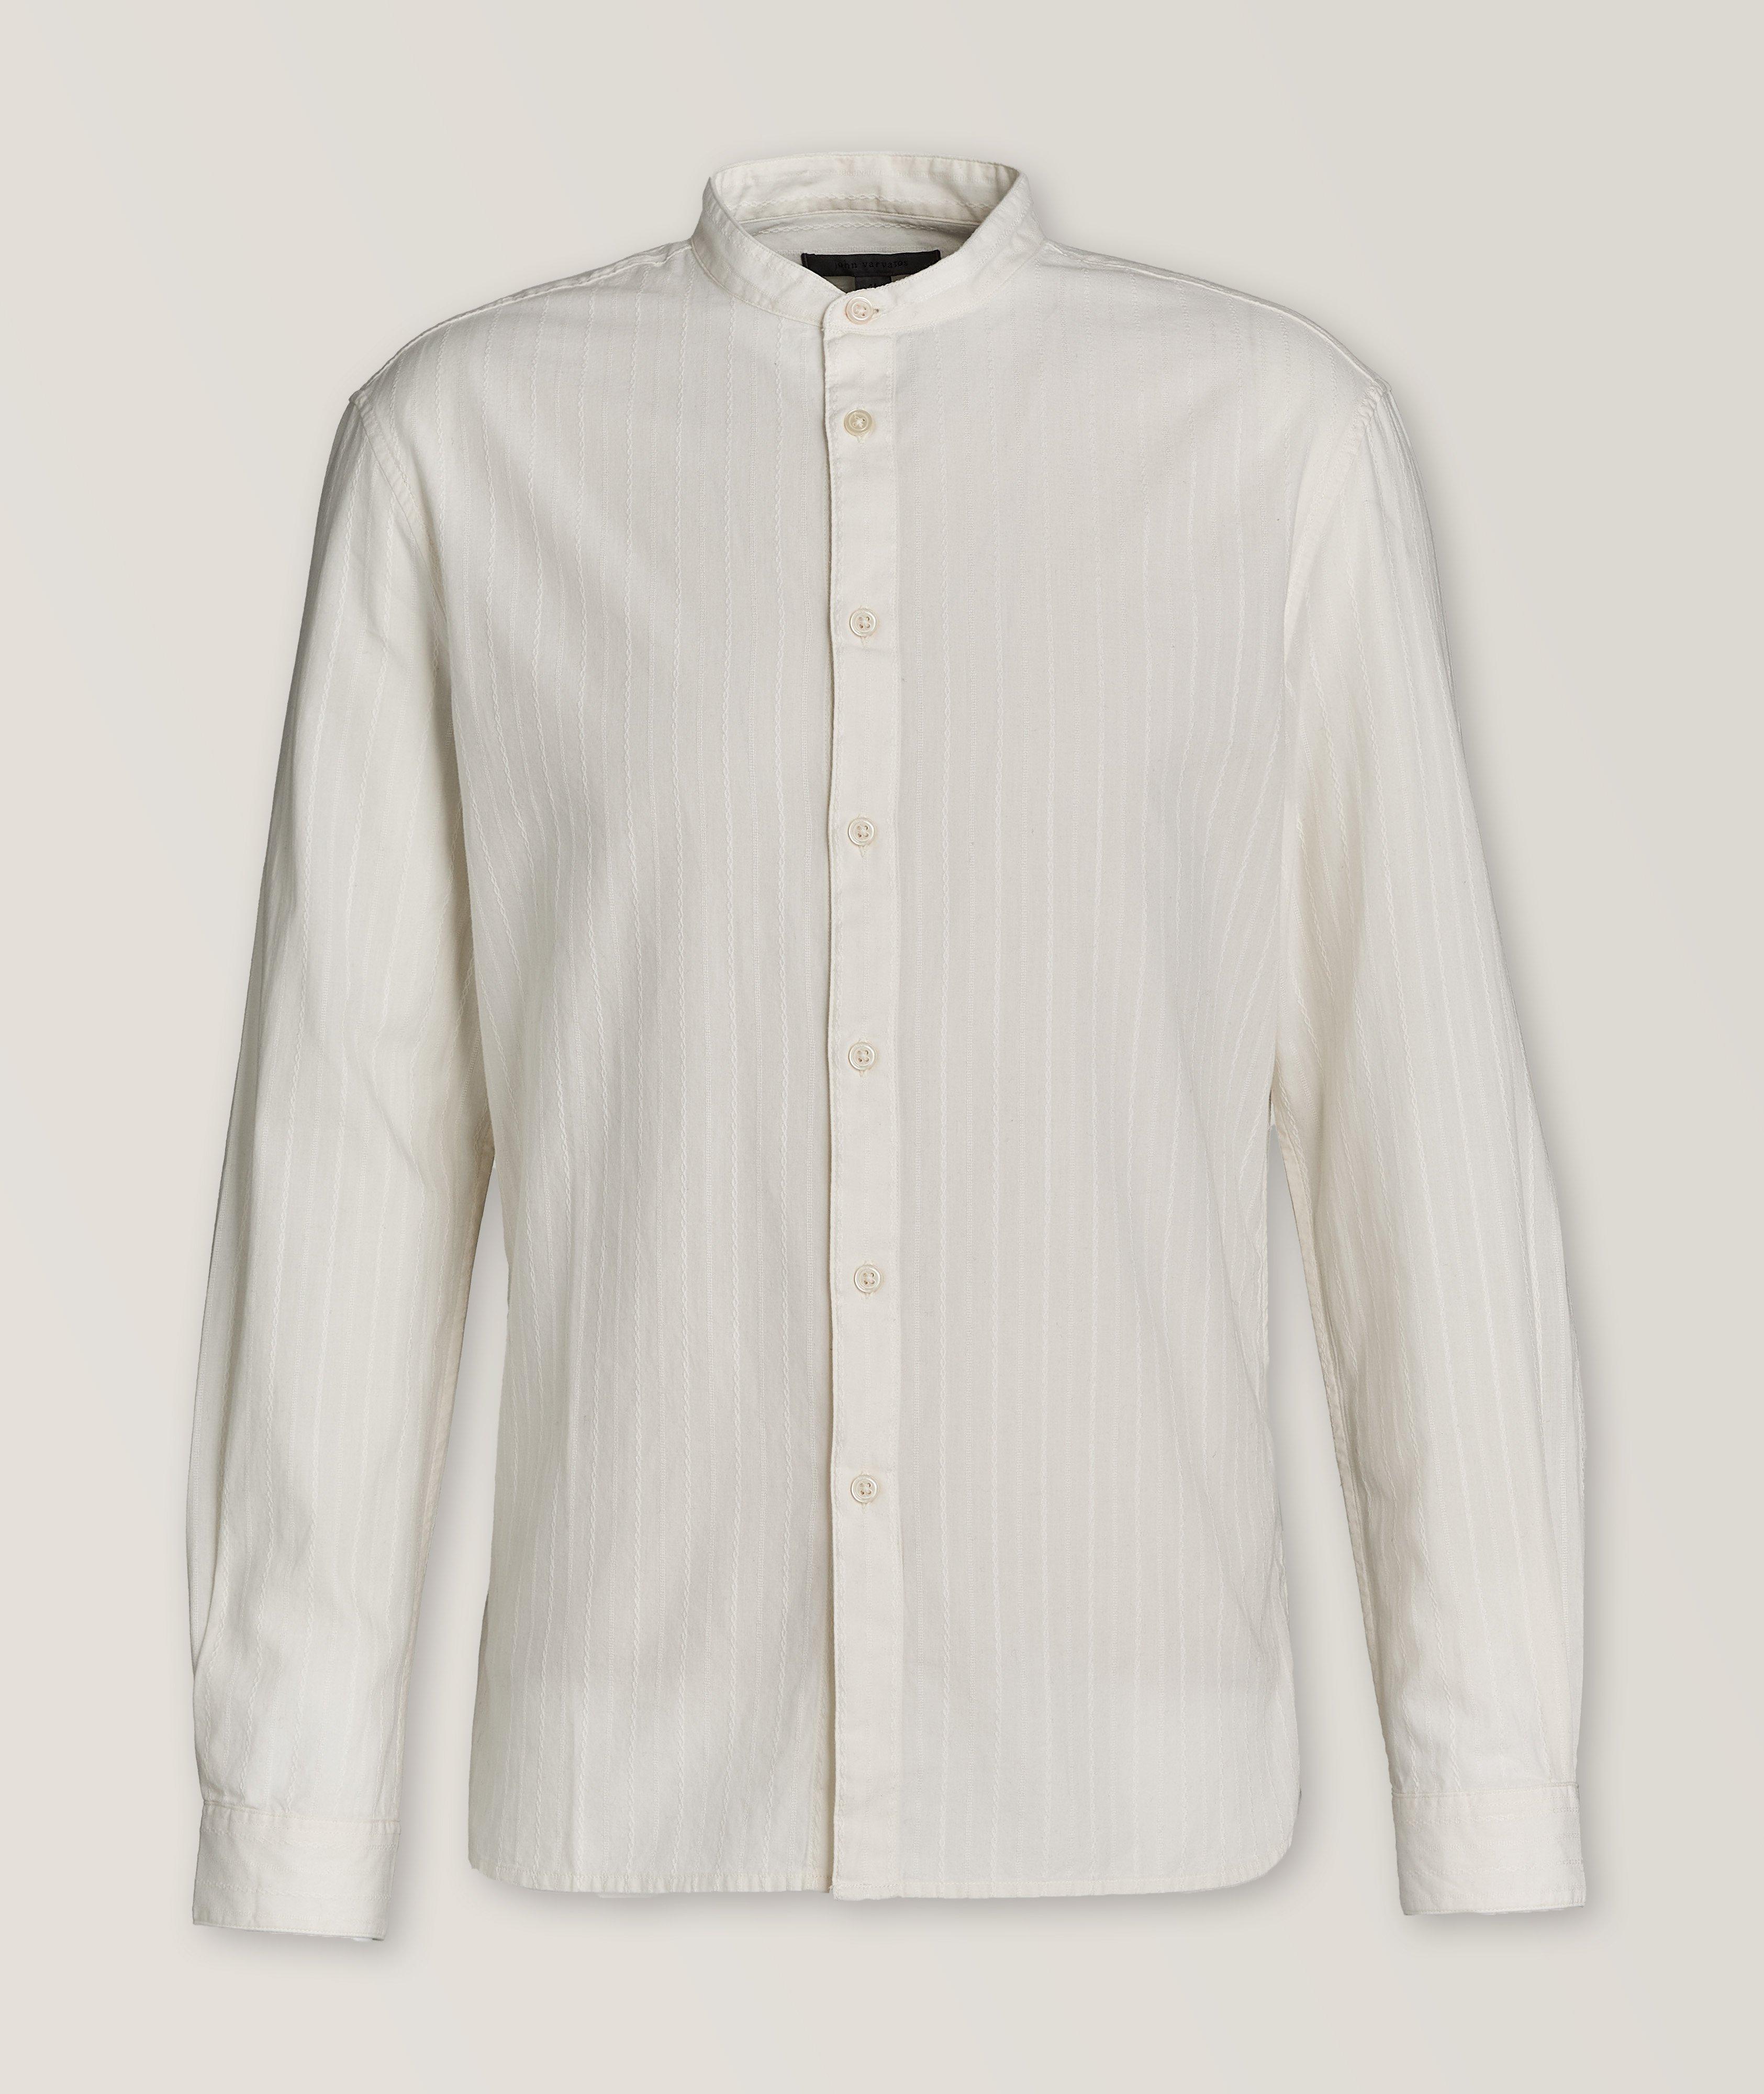 Braided Stripe Cotton Sport Shirt image 0